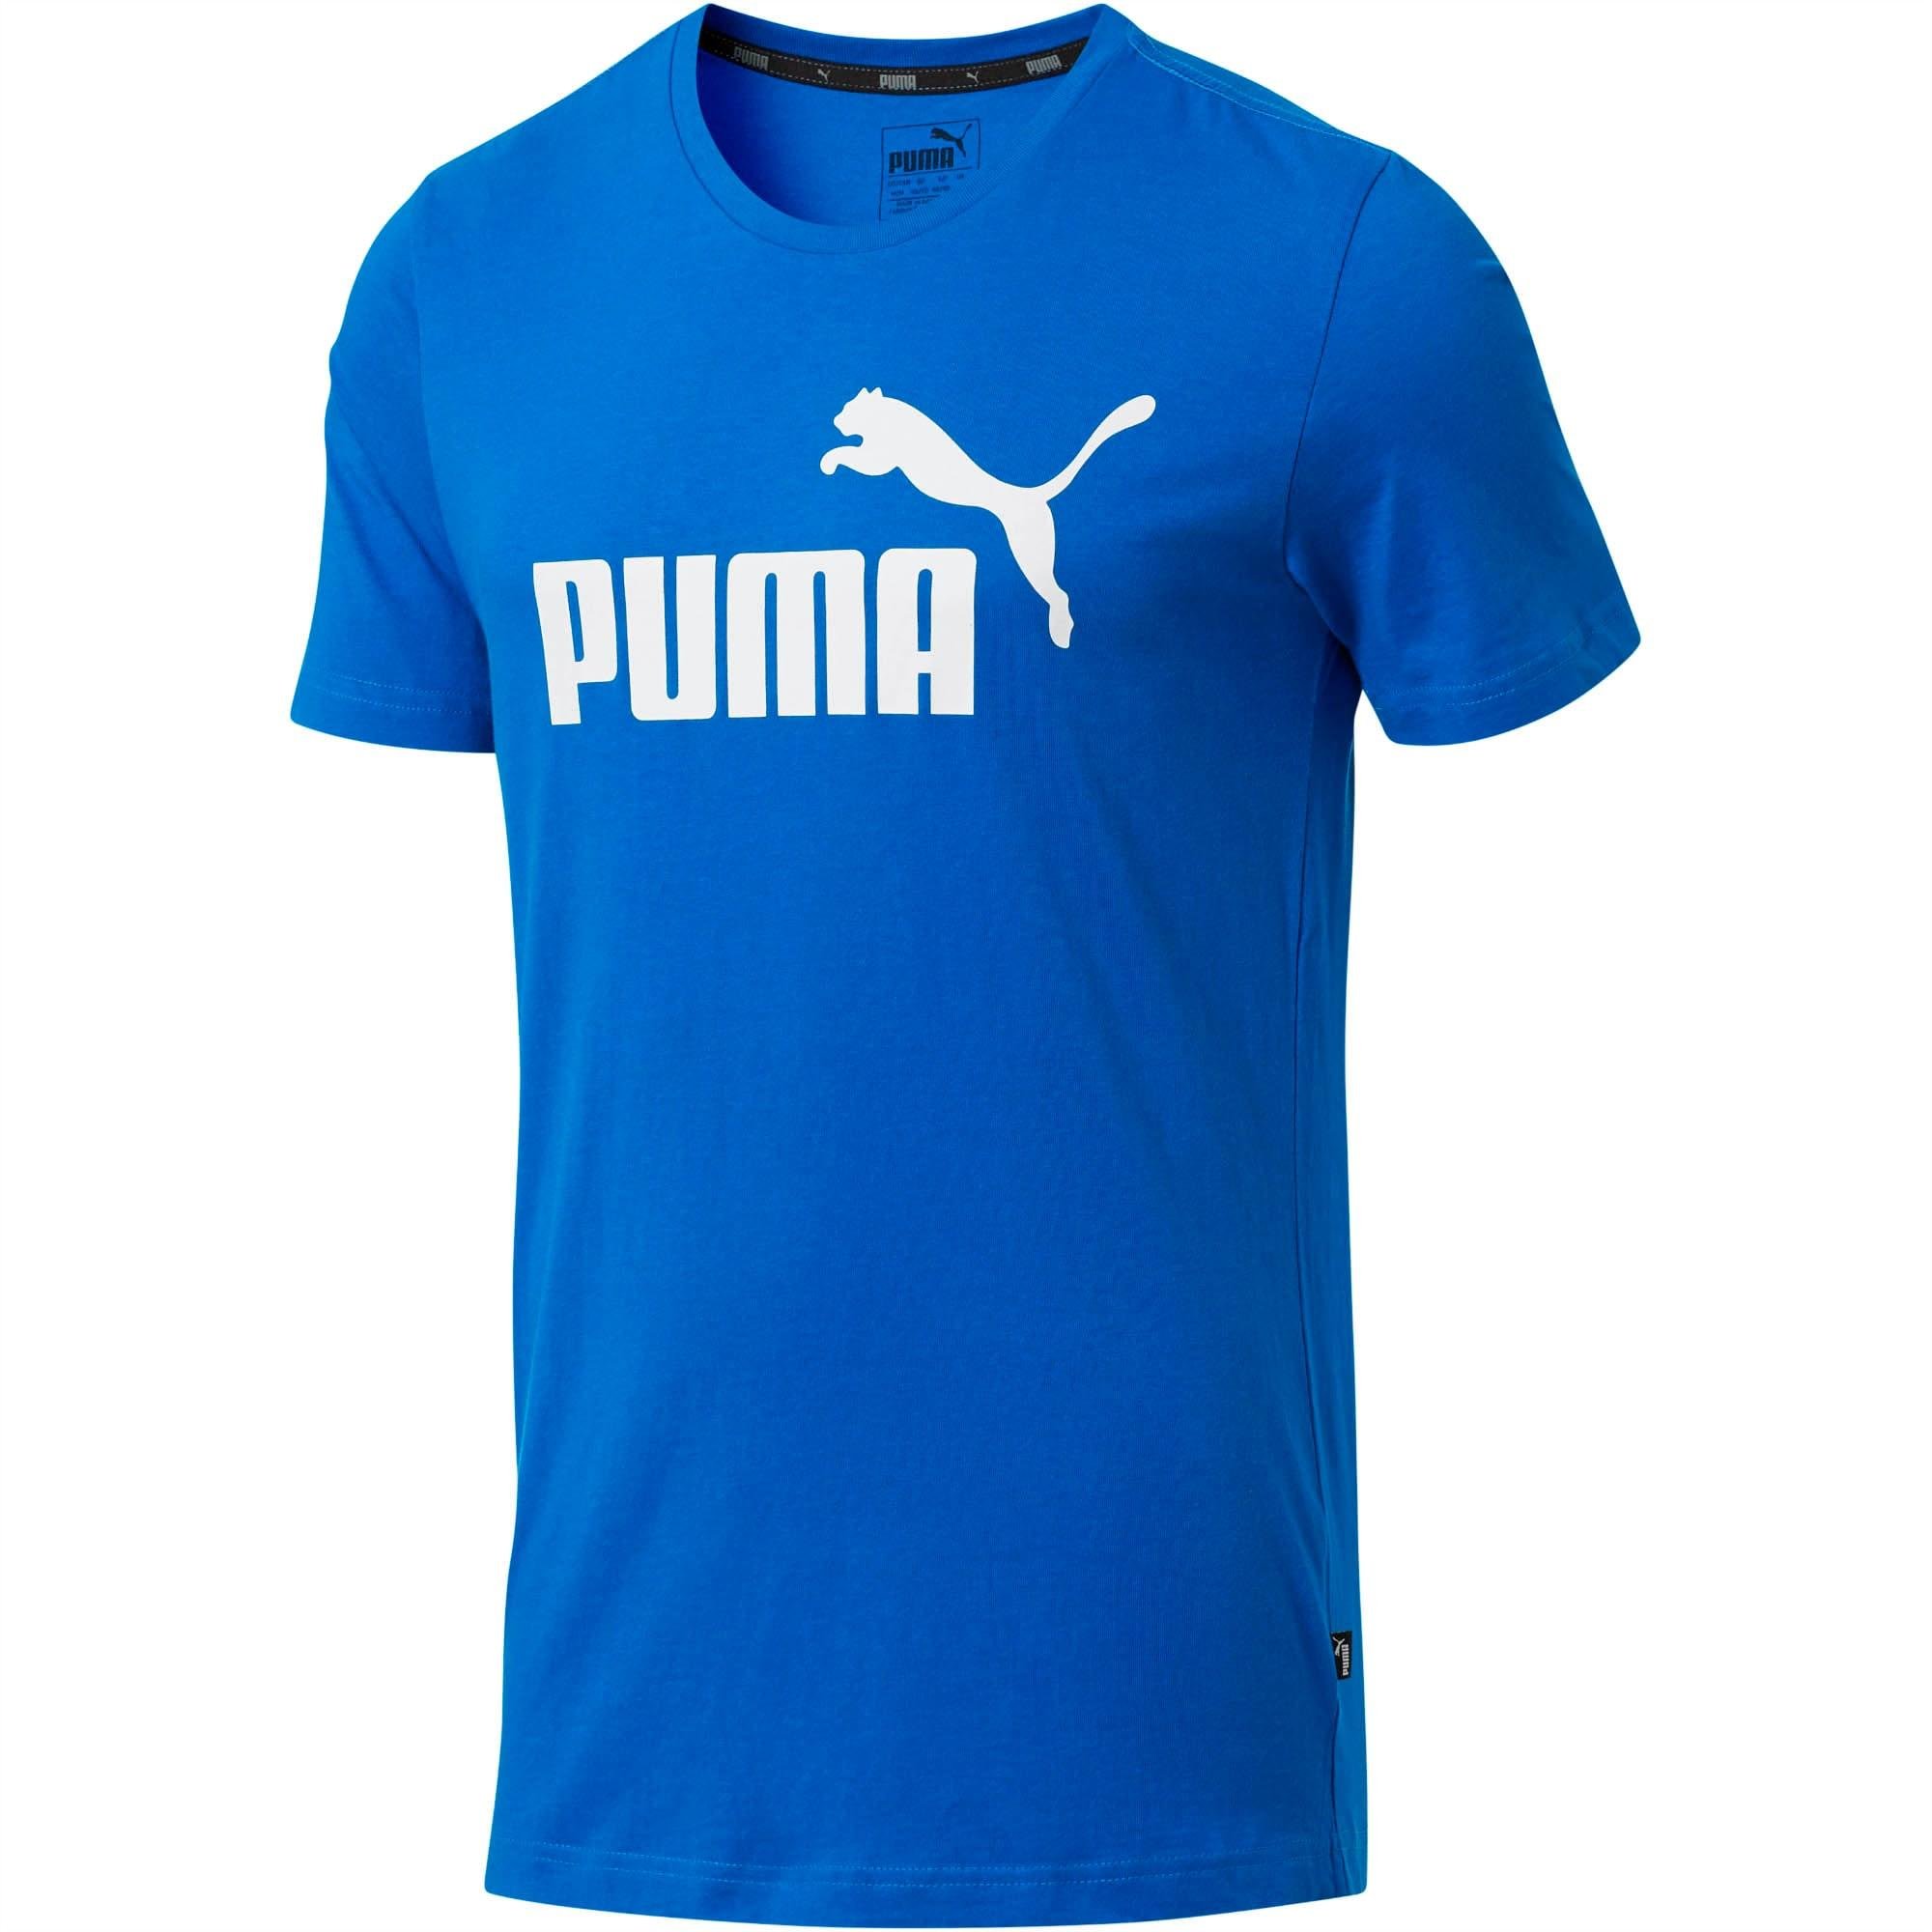 PUMA Cotton Essential Logo T-shirt in Blue for Men - Lyst